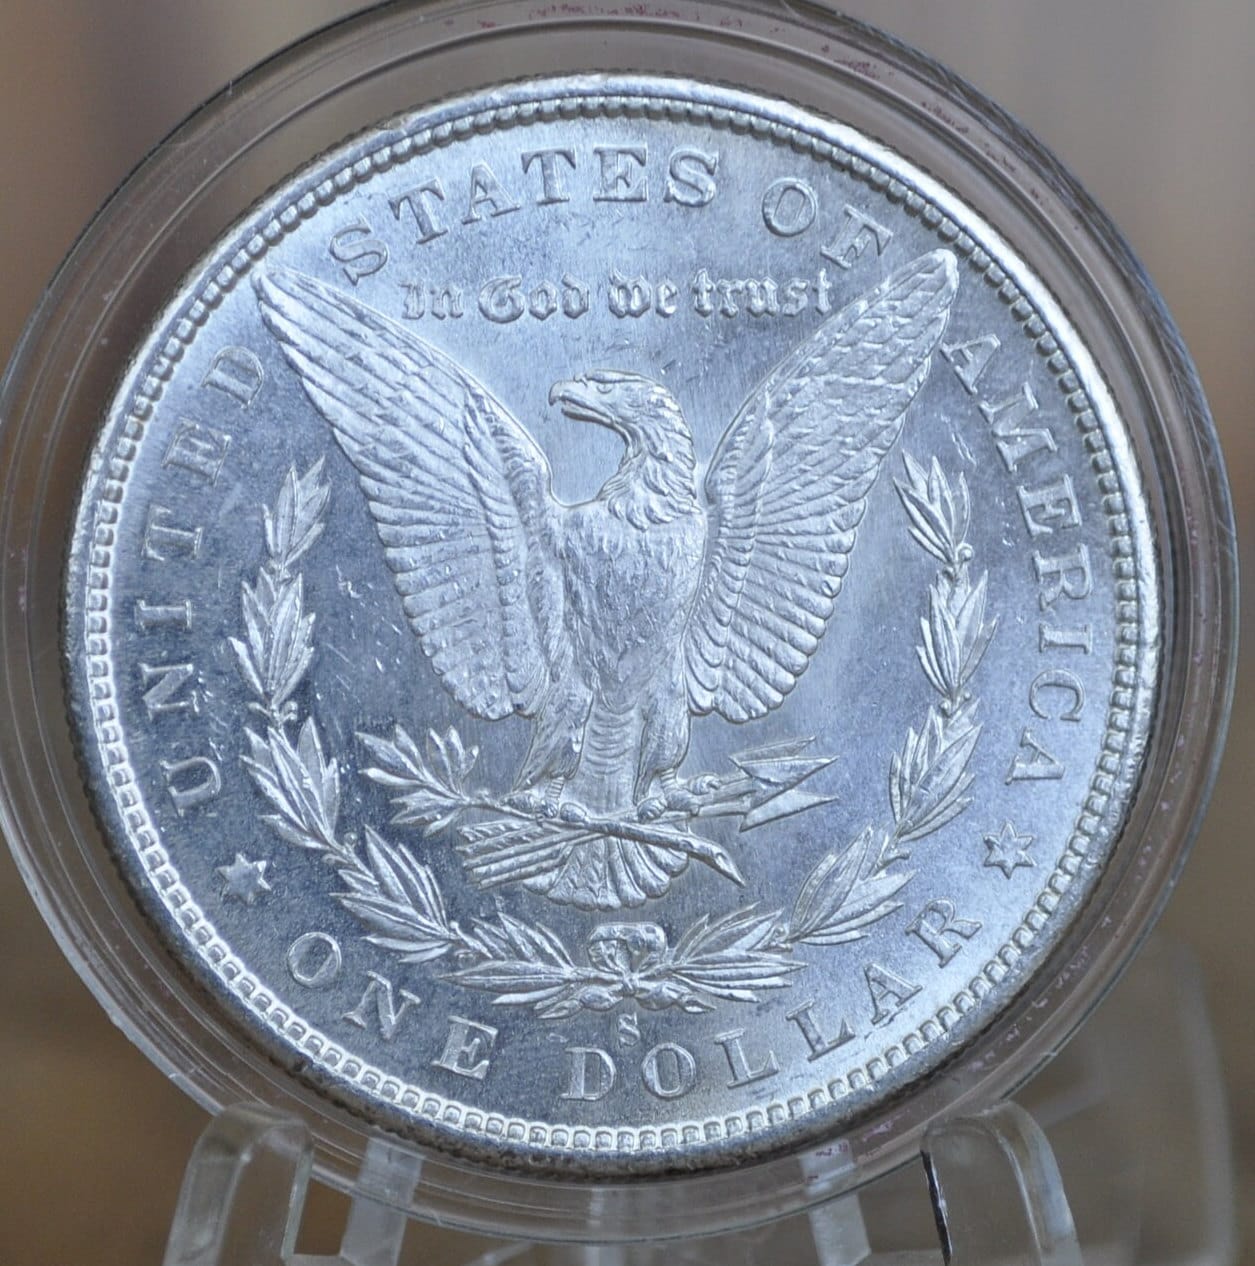 1880-S Morgan Silver Dollar - Choose by Grade / Condition - San Francisco Mint - Silver Dollar 1880 S - 1880 S Morgan Dollar